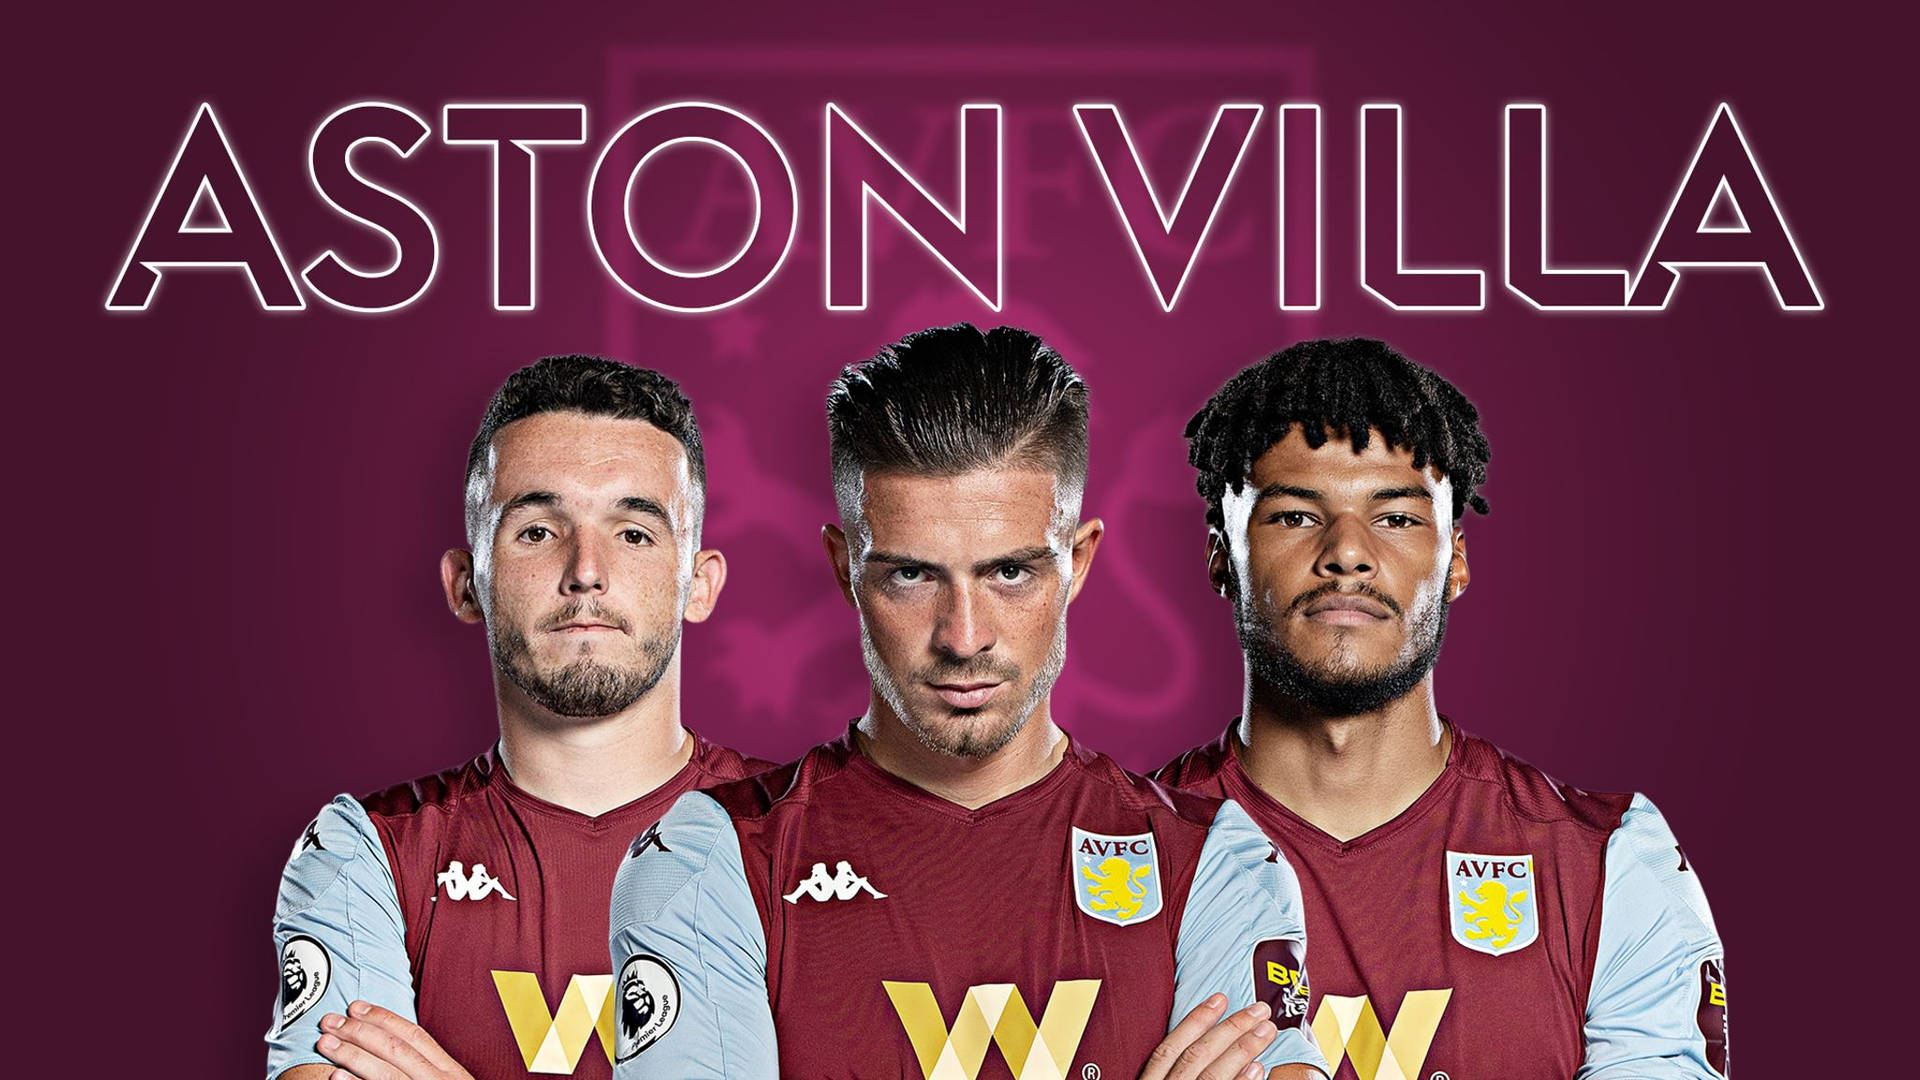 Aston Villa Fan Poster